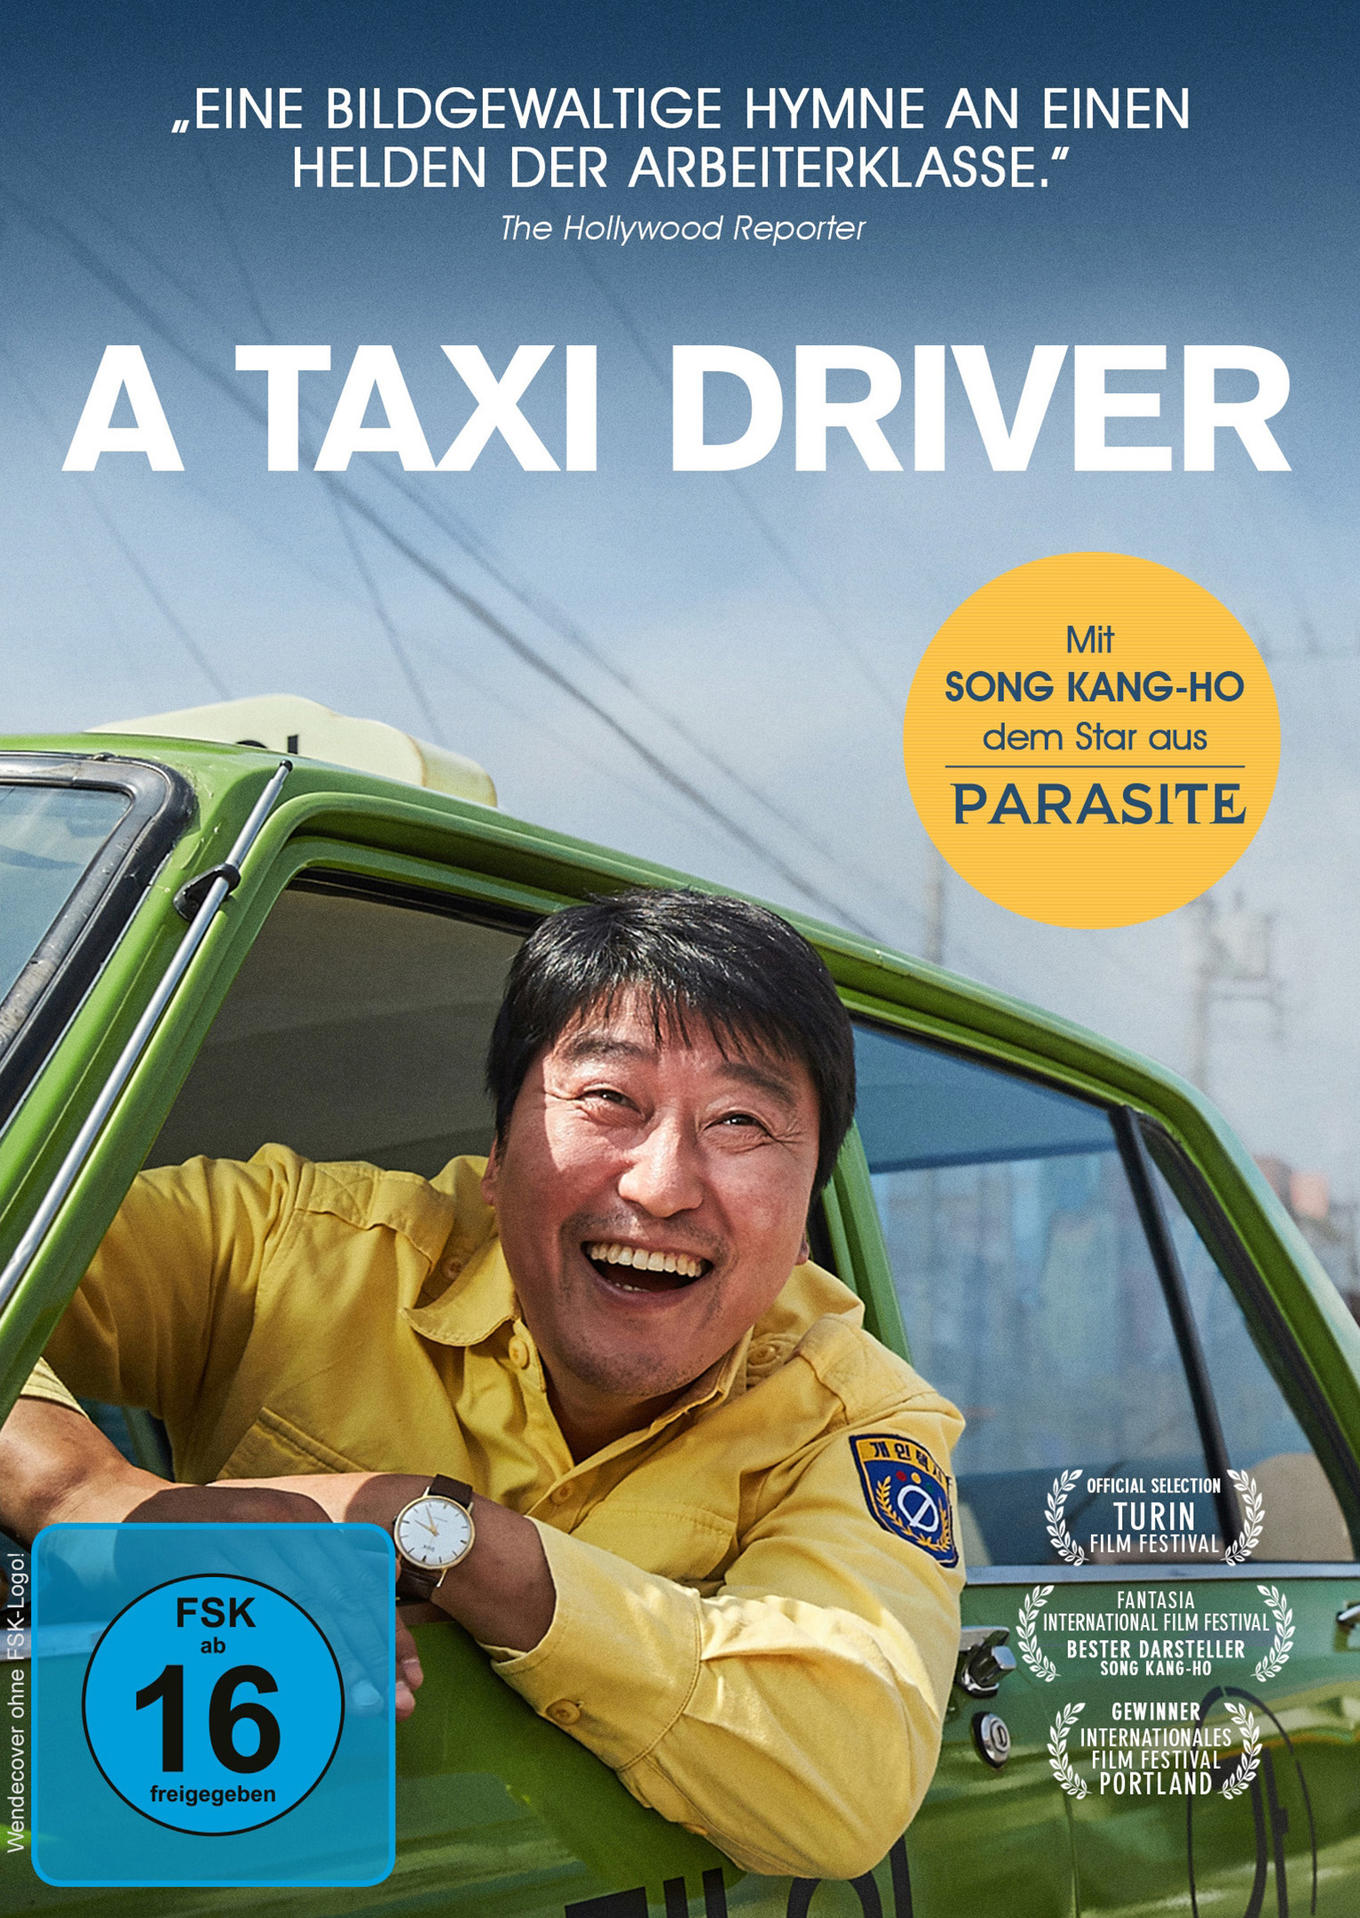 Taxi DVD Driver A